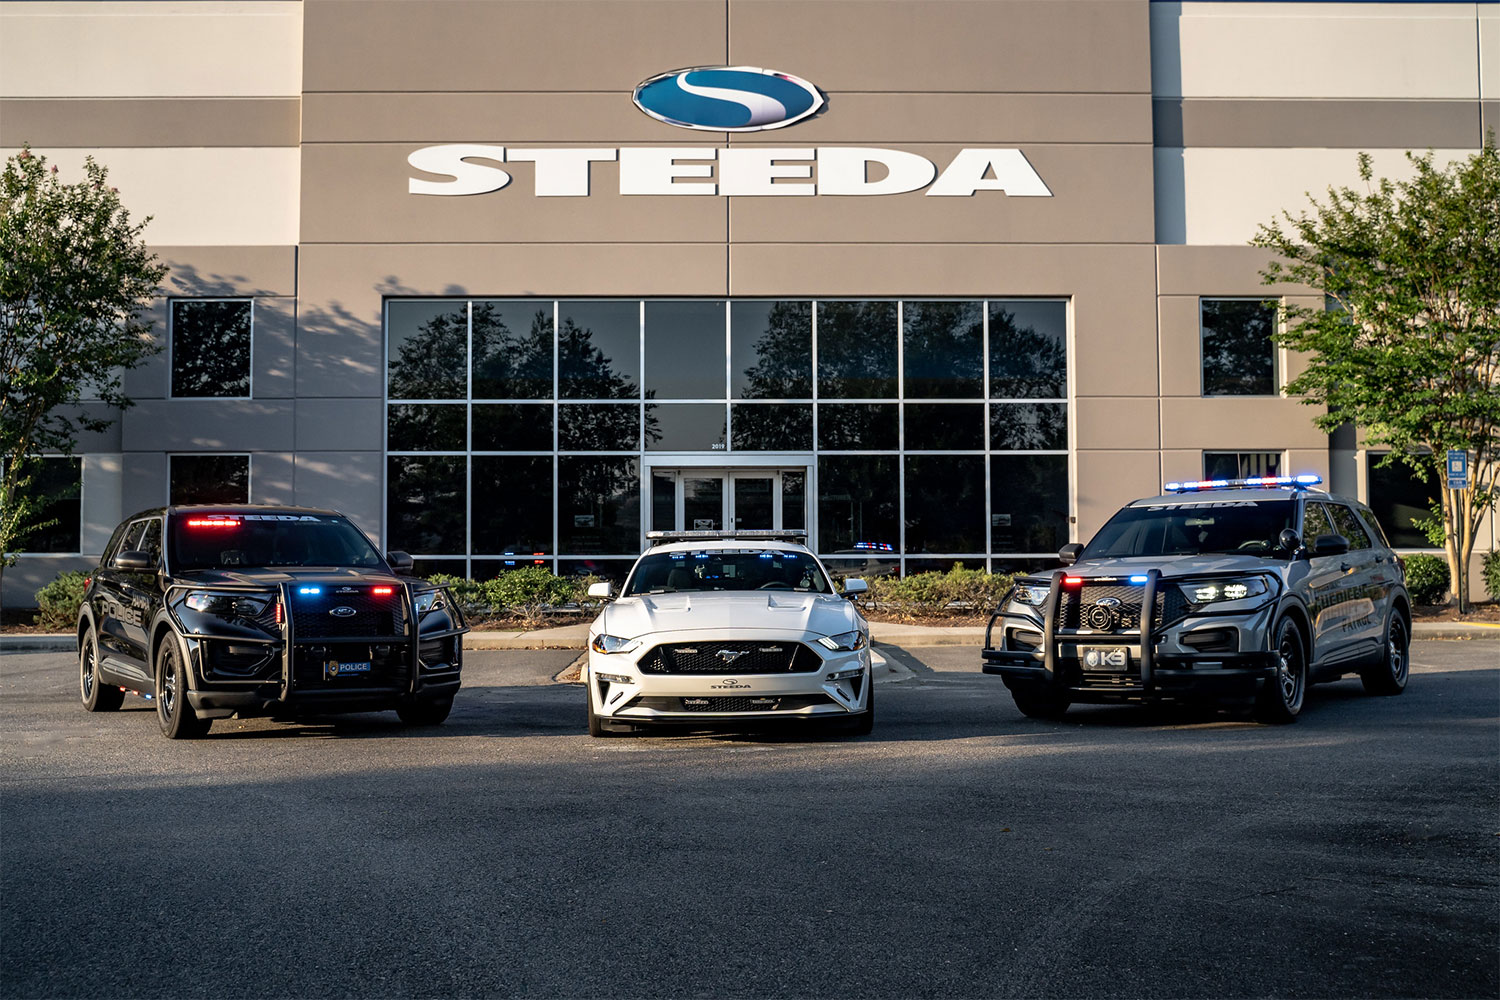 Steeda SSV Police Vehicles